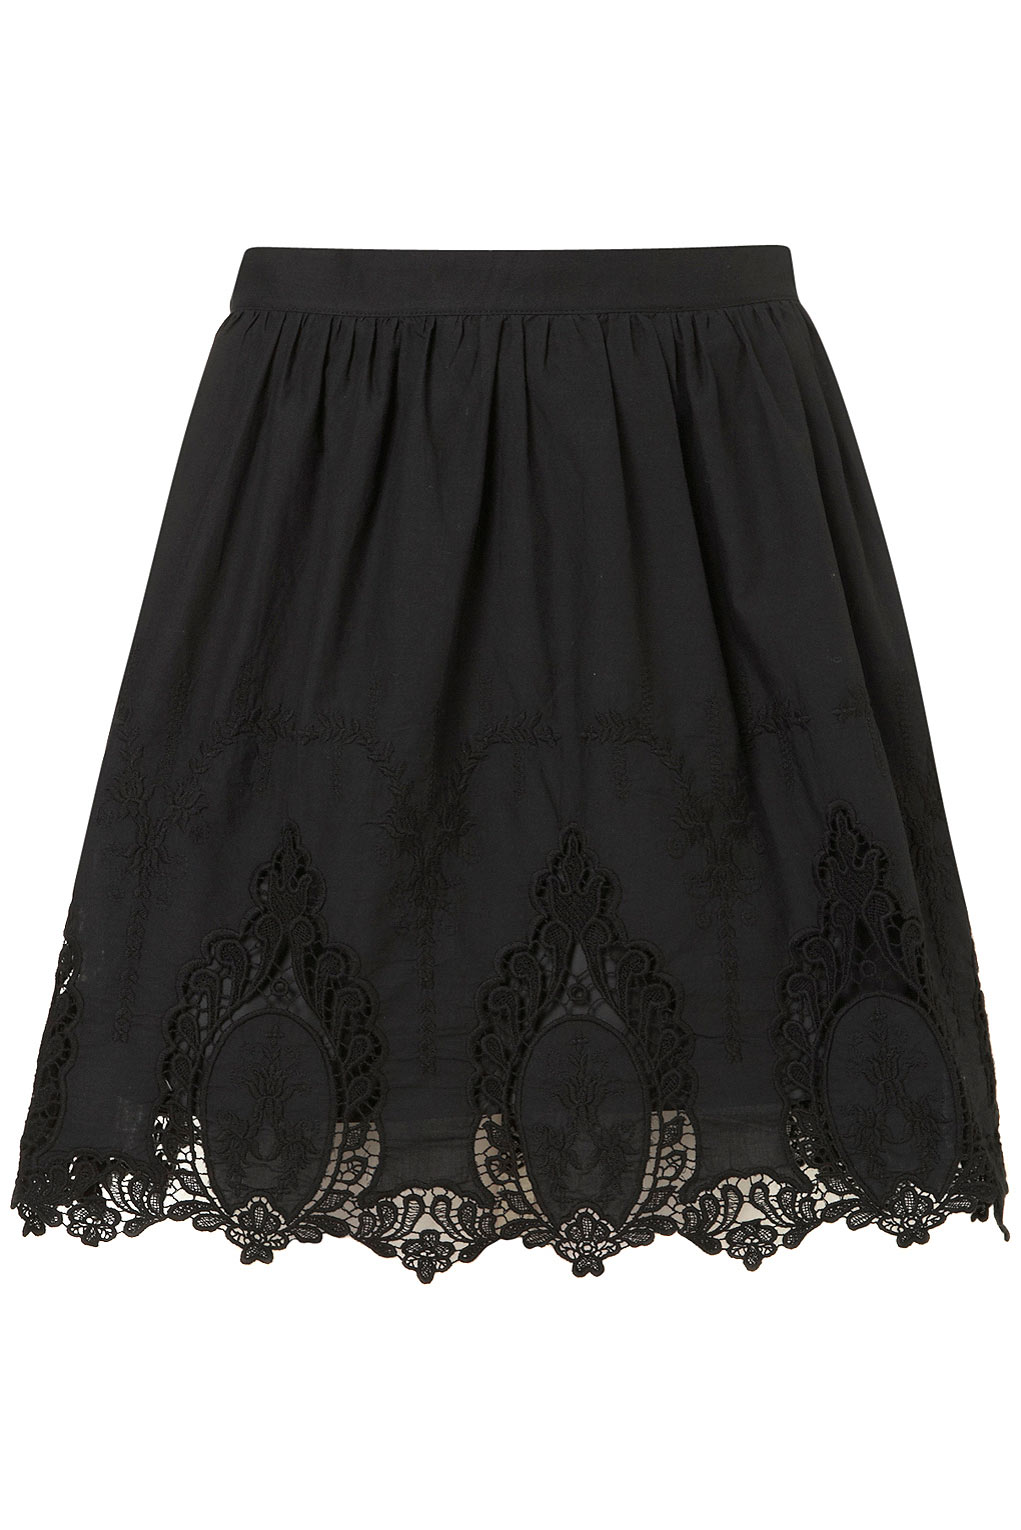 Lyst - Topshop Black Embroidered Full Skirt in Black